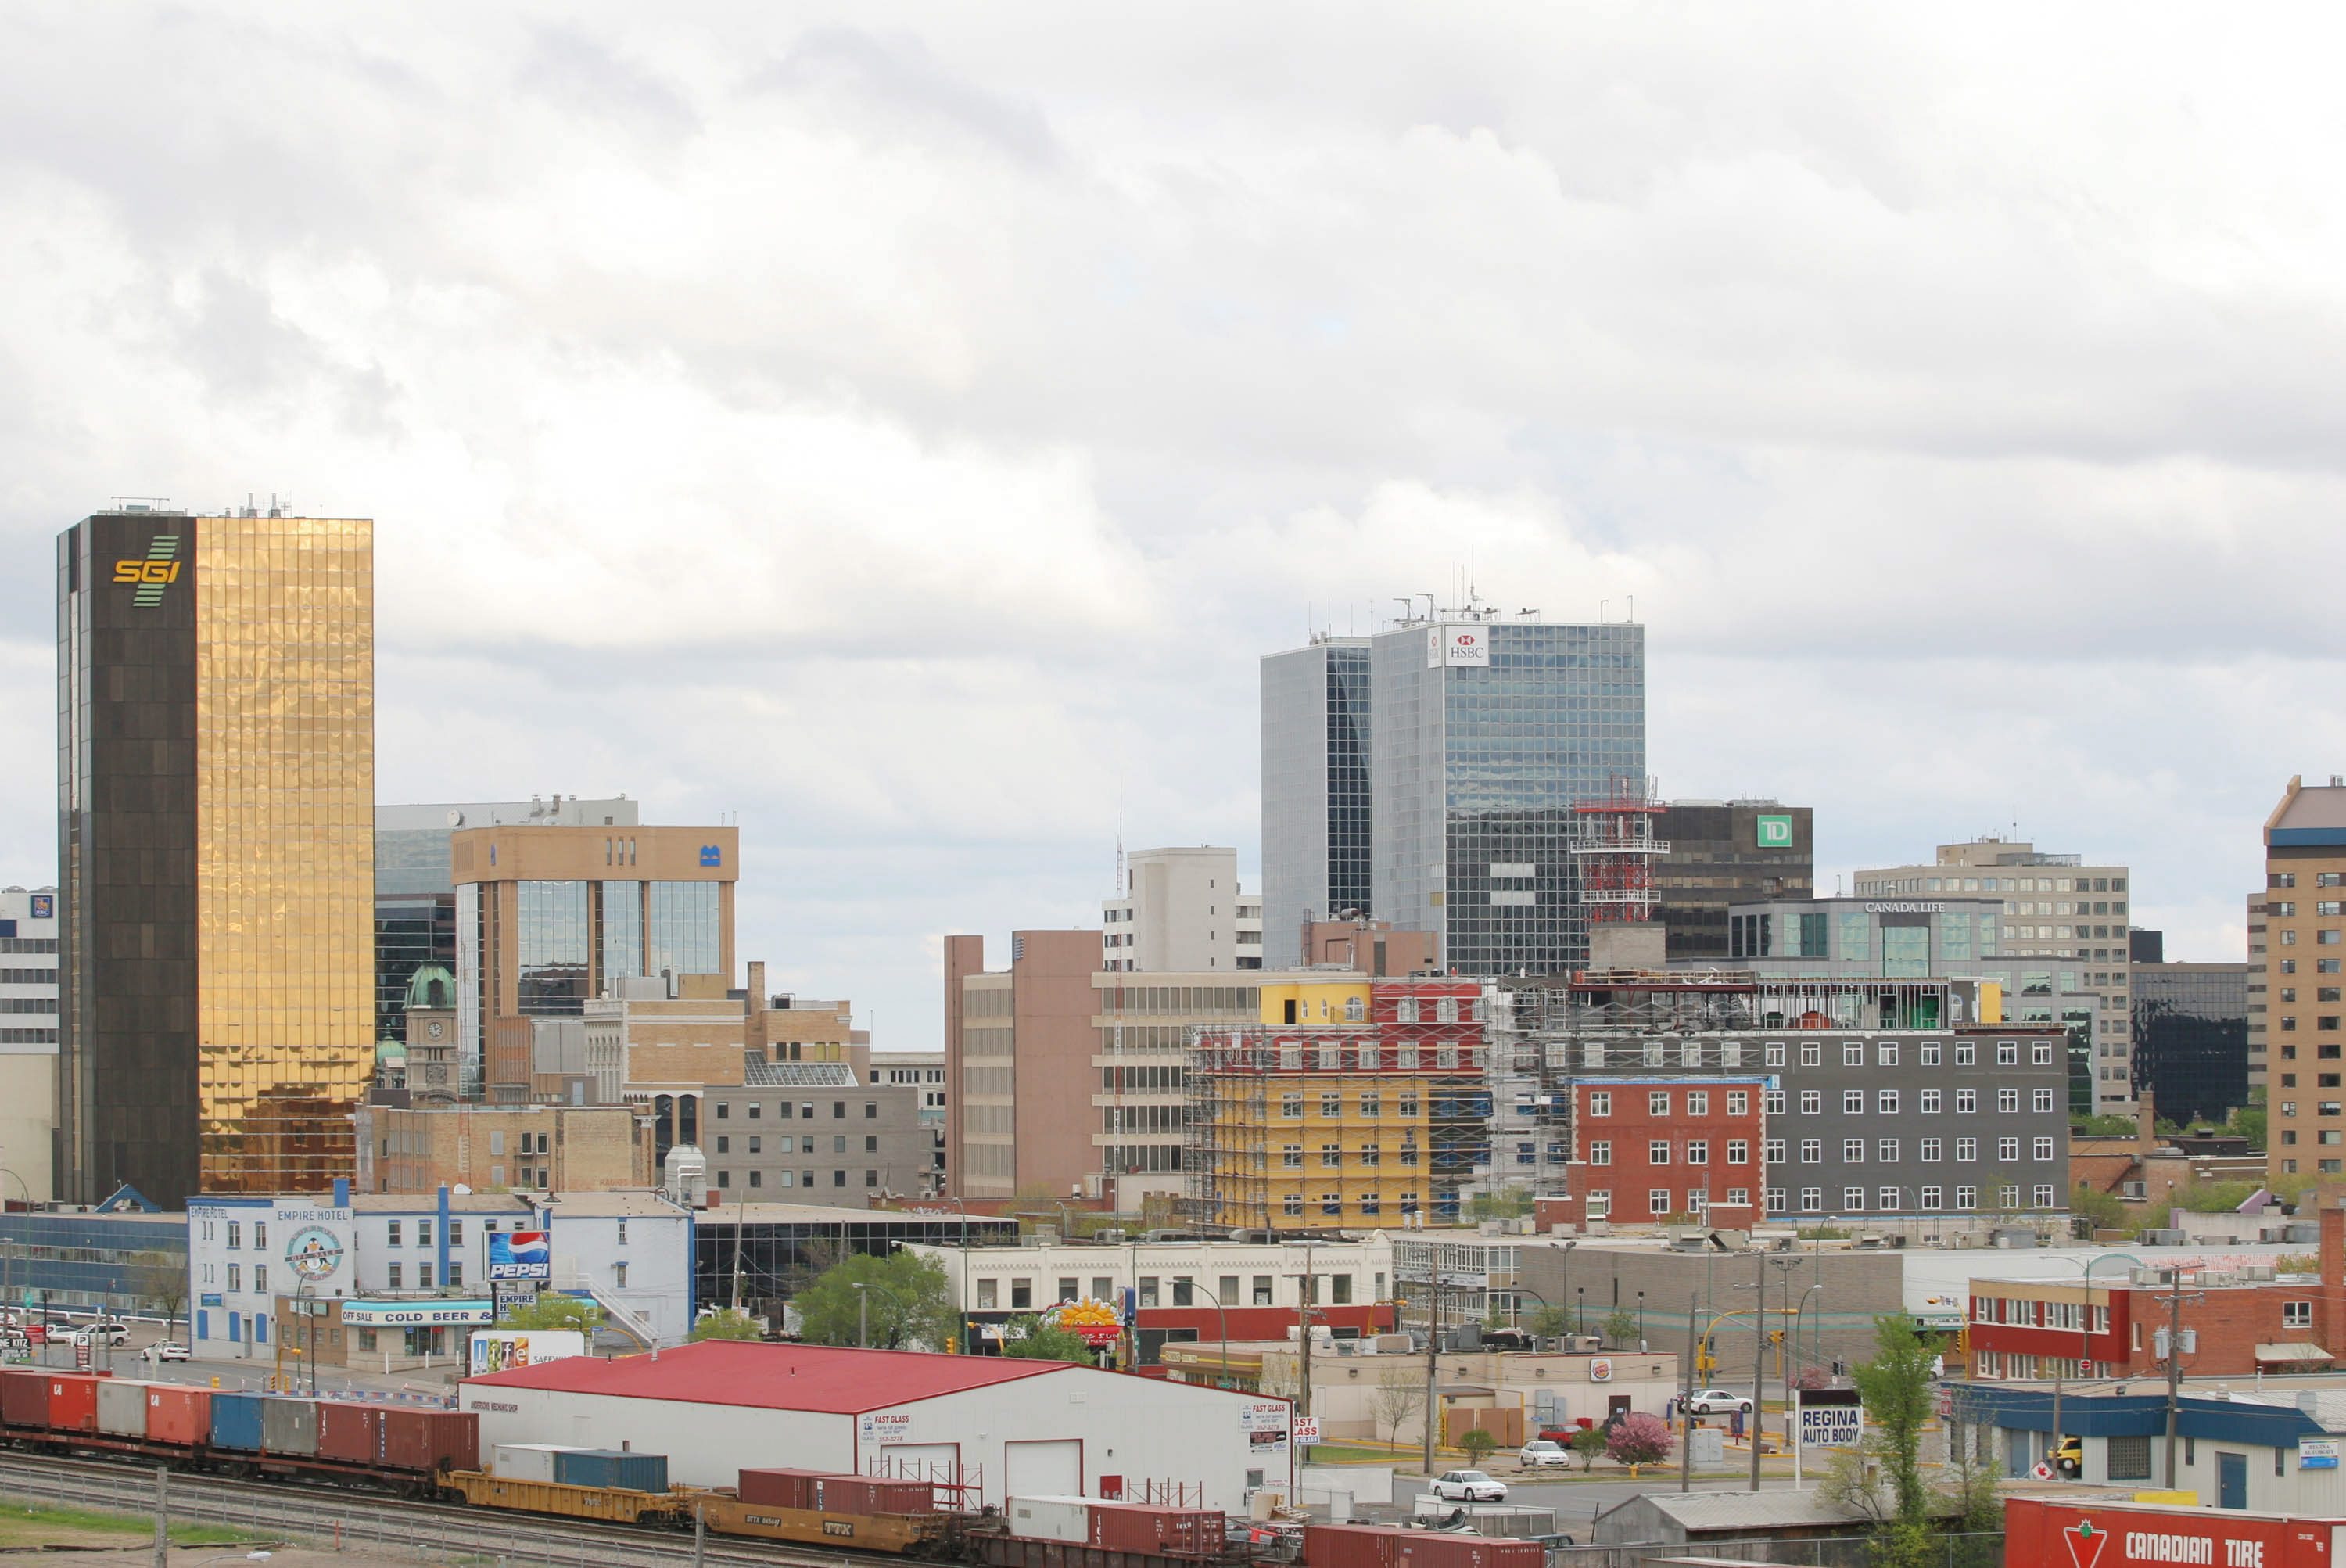  Le Regina, Sask. paysage urbain vu de Taylor Field le dimanche 29 mai 2005.